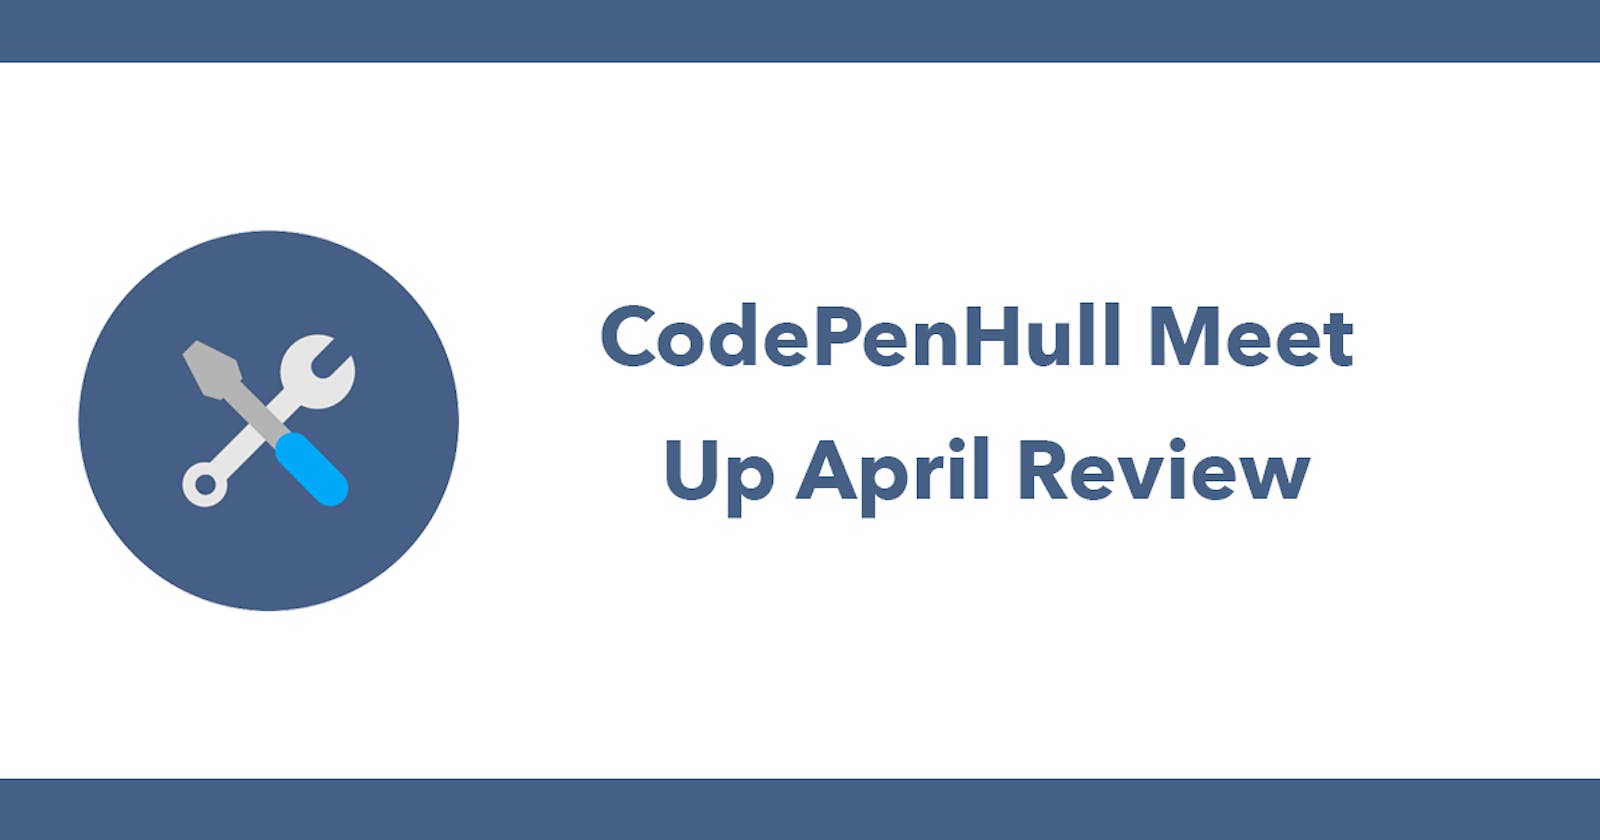 CodePenHull Meet Up April Review